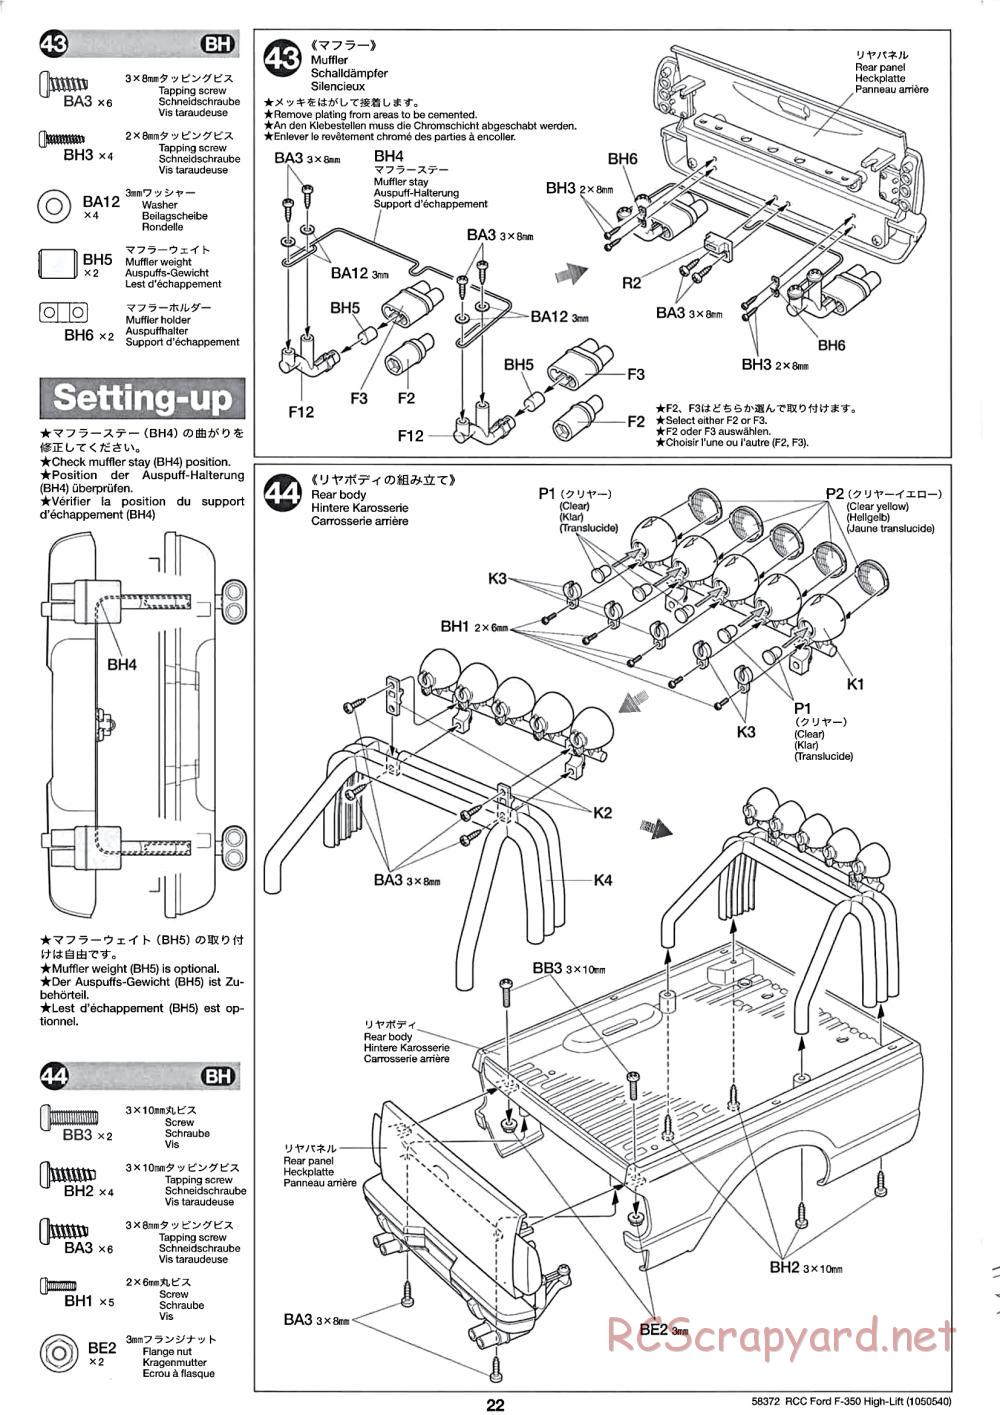 Tamiya - Ford F350 High-Lift Chassis - Manual - Page 22